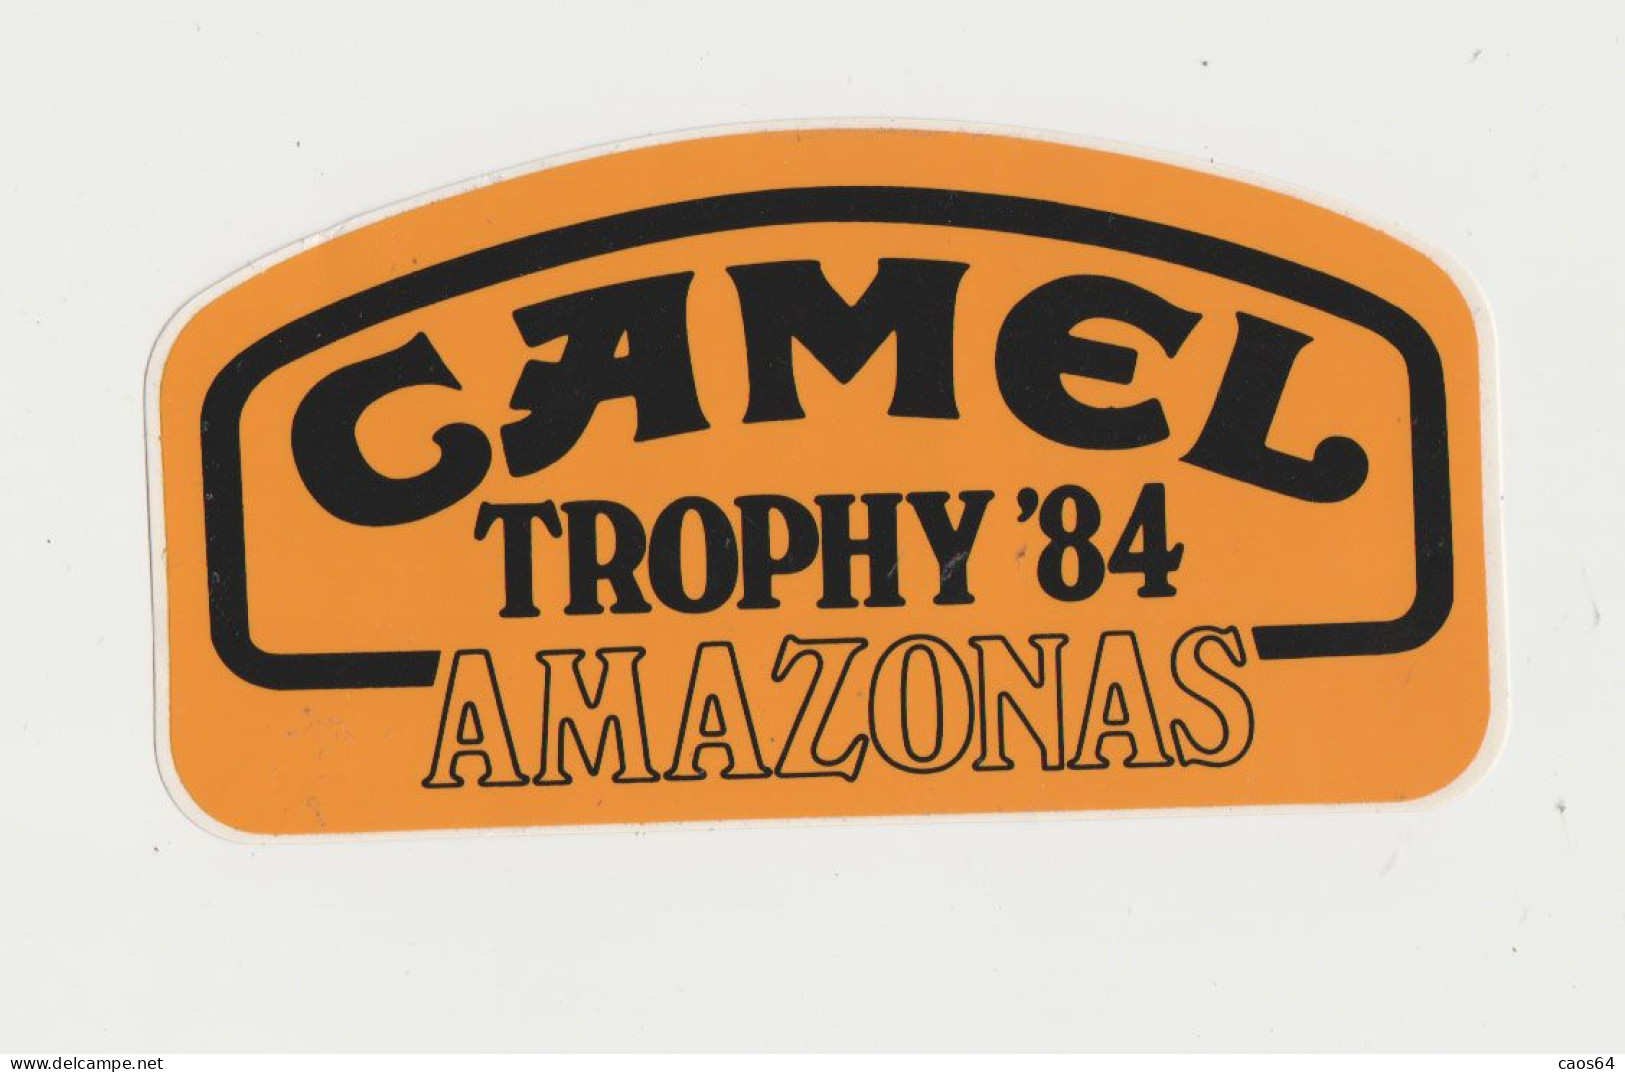 Camel Trophy '84 Amazonas  16 X 8 Cm  ADESIVO STICKER  NEW ORIGINAL - Autocollants